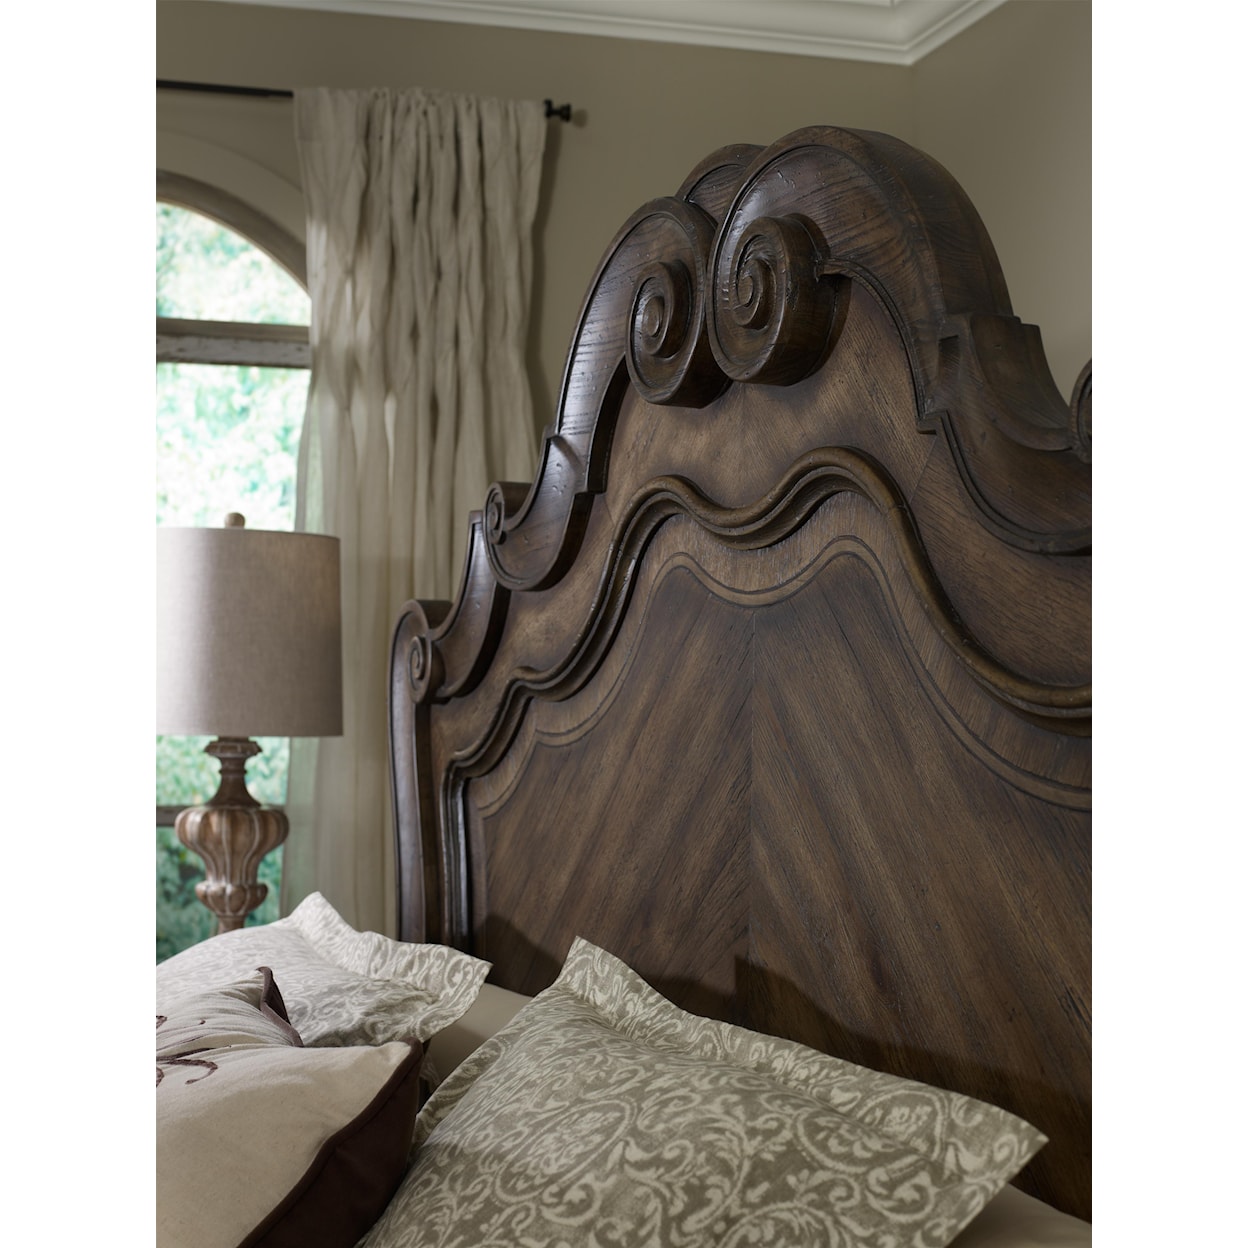 Hooker Furniture Rhapsody Cali King Panel Bed